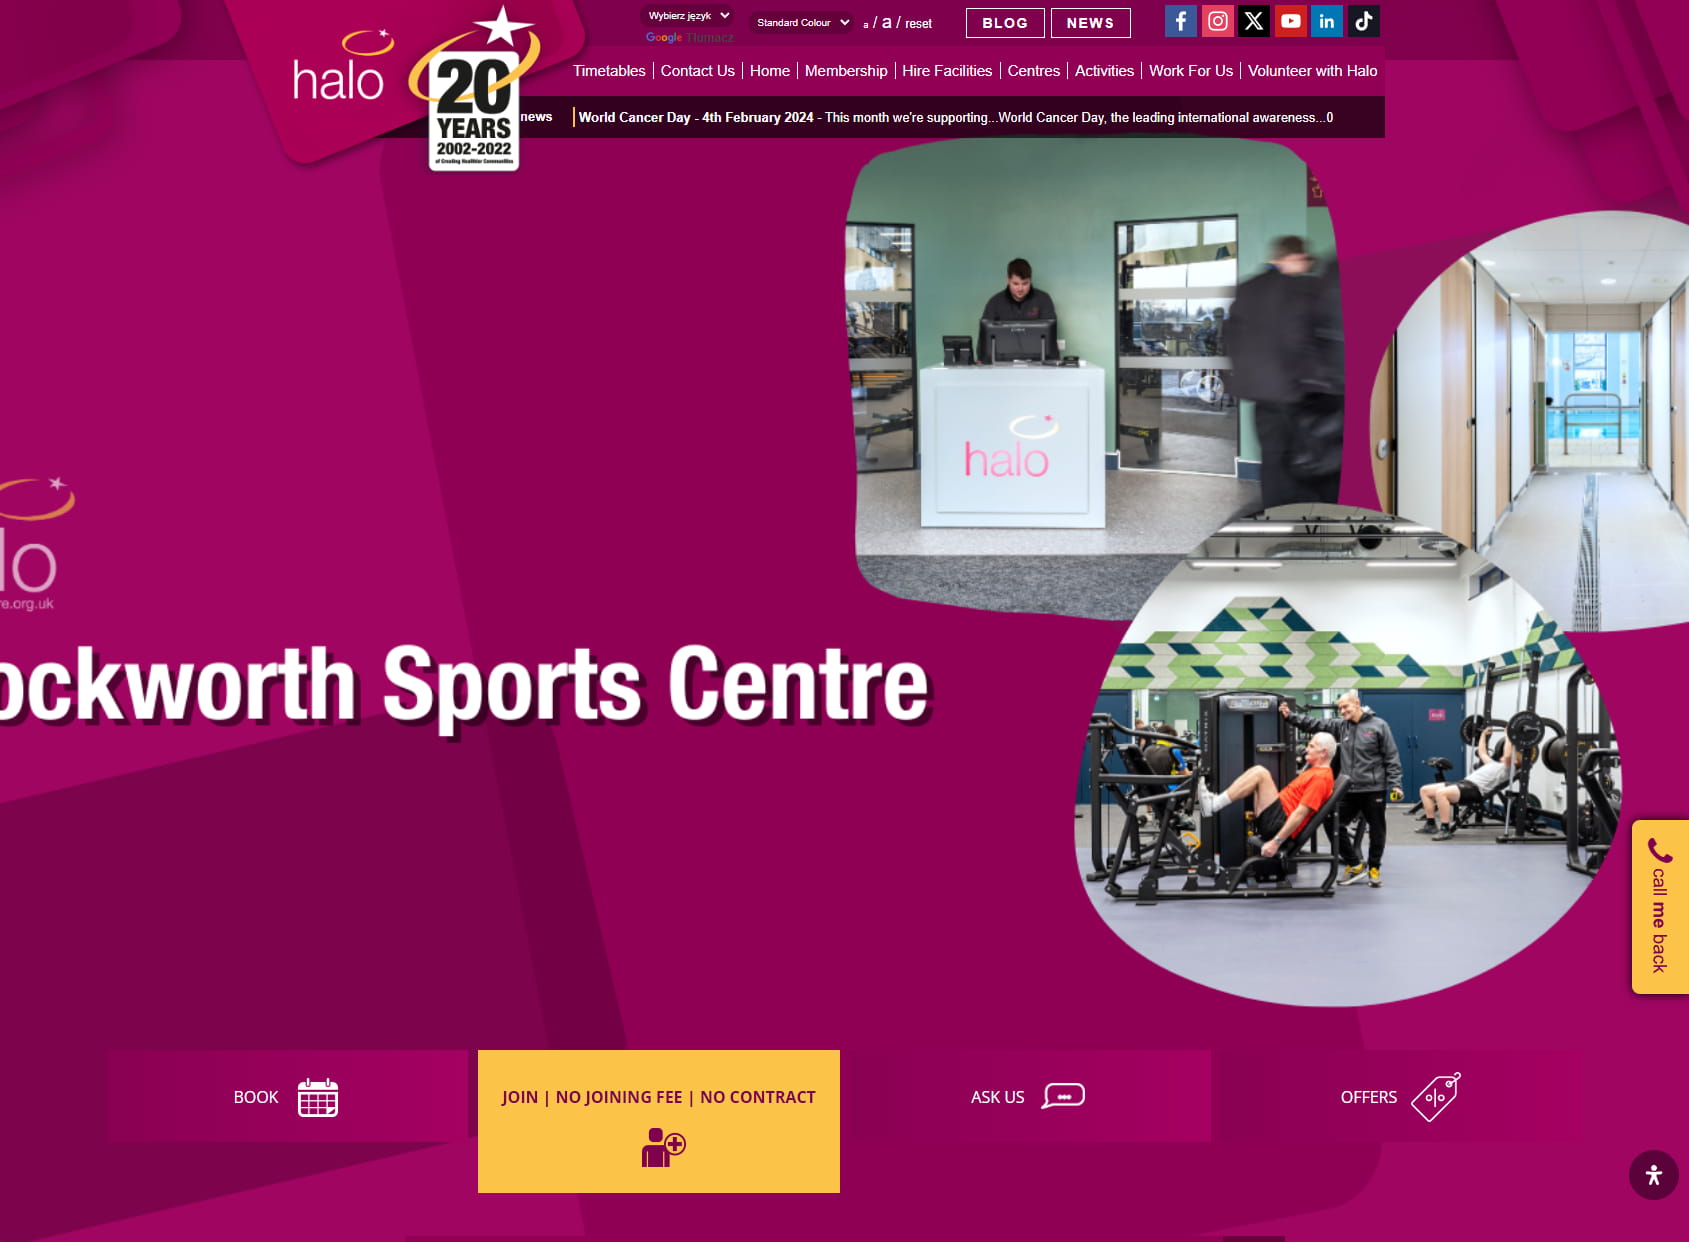 Halo Brockworth Sports Centre